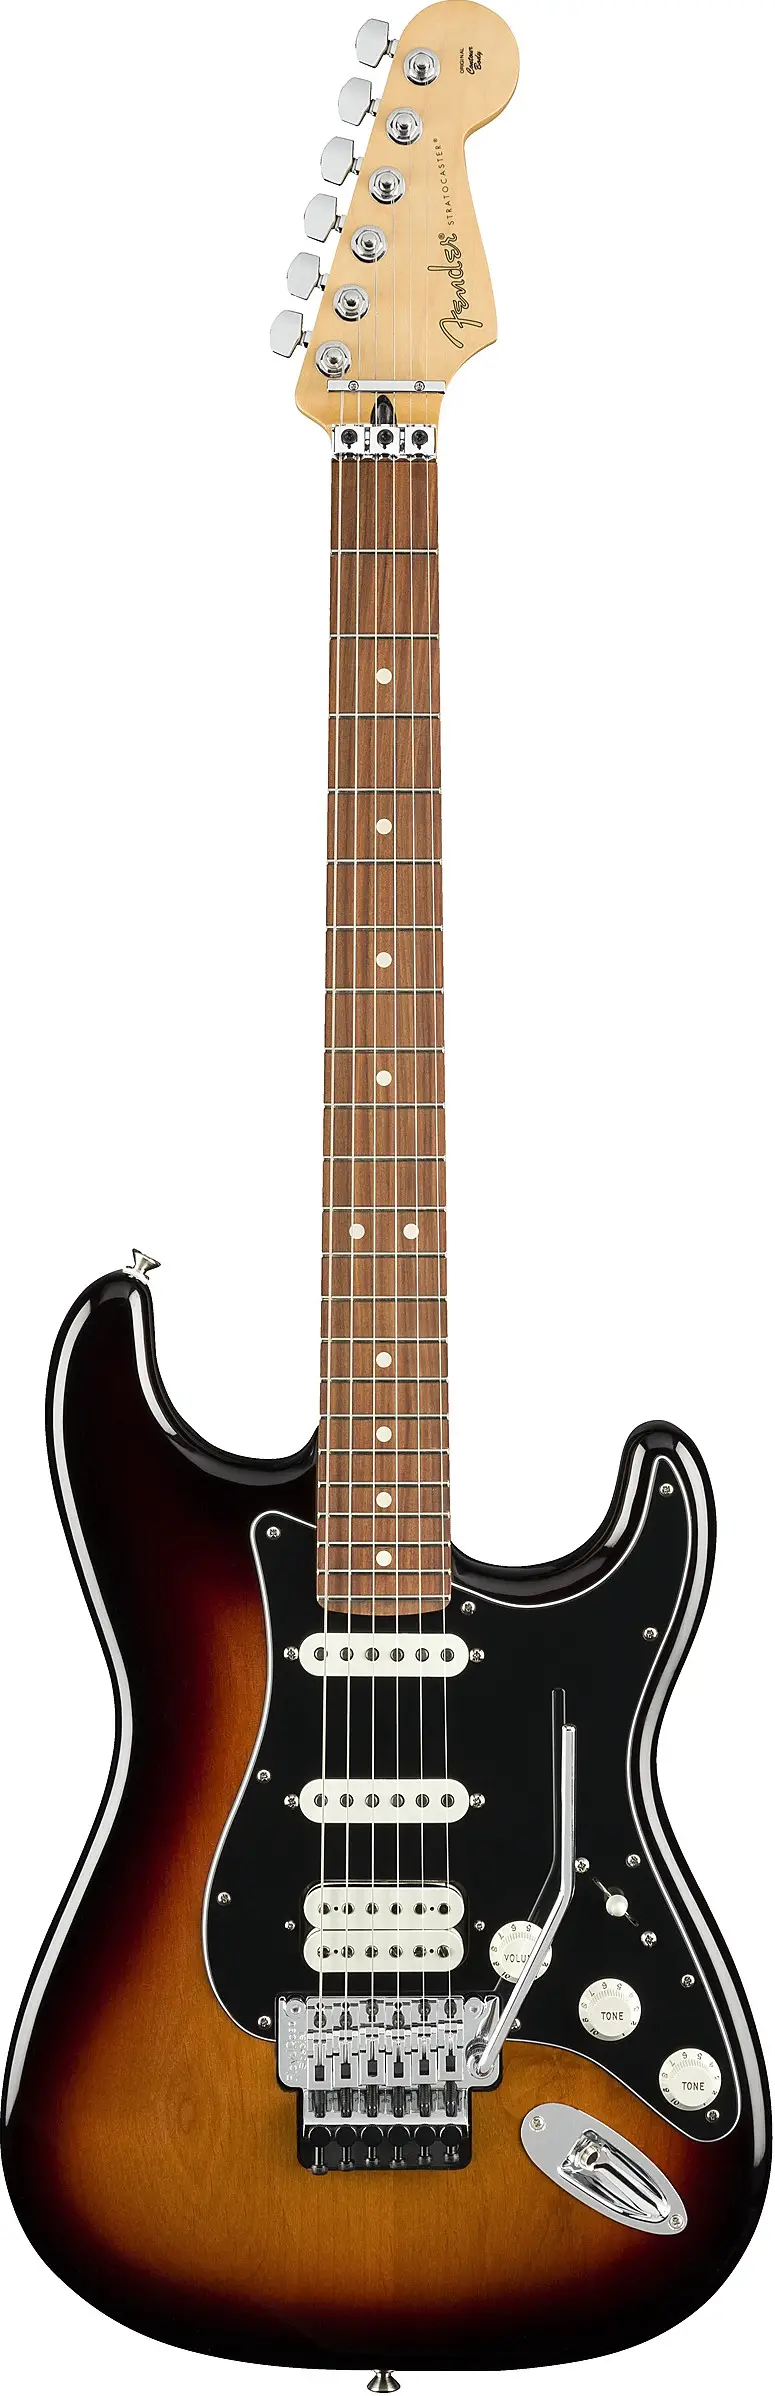 Fender Player Stratocaster  Floyd Rose  HSS Review | Chorder.com